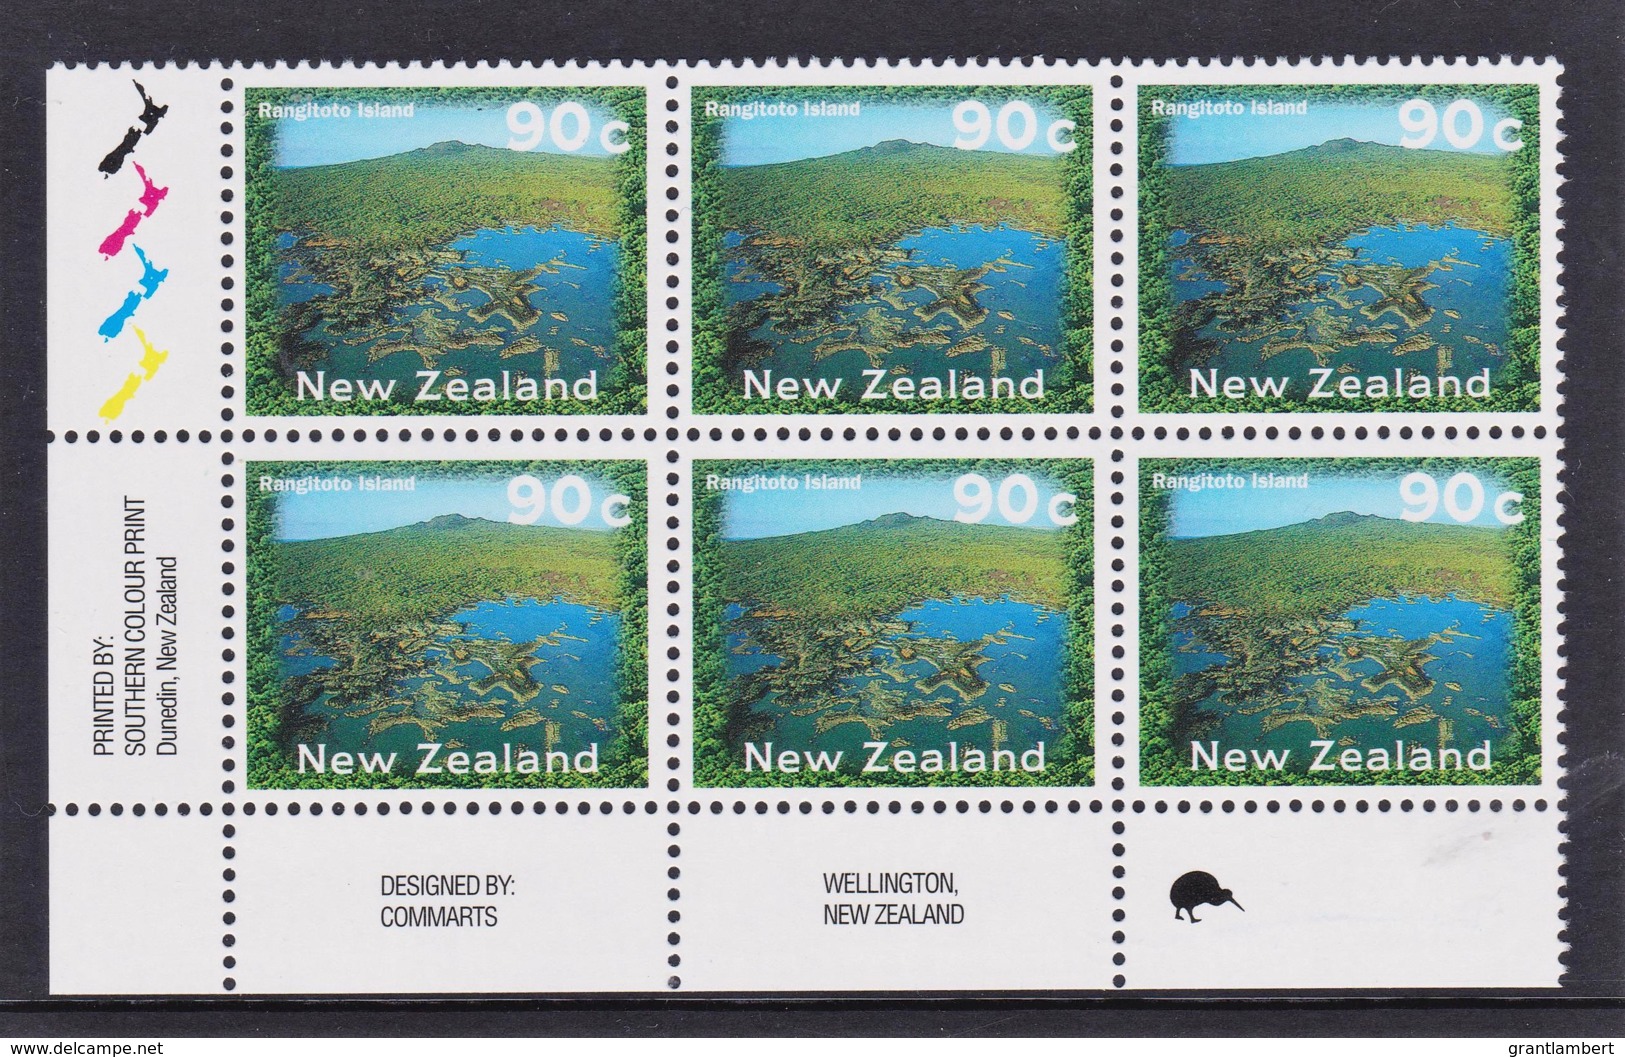 New Zealand 2000 Scenic 90c Rangitoto Island Control Block MNH, 1 Kiwi - Unused Stamps